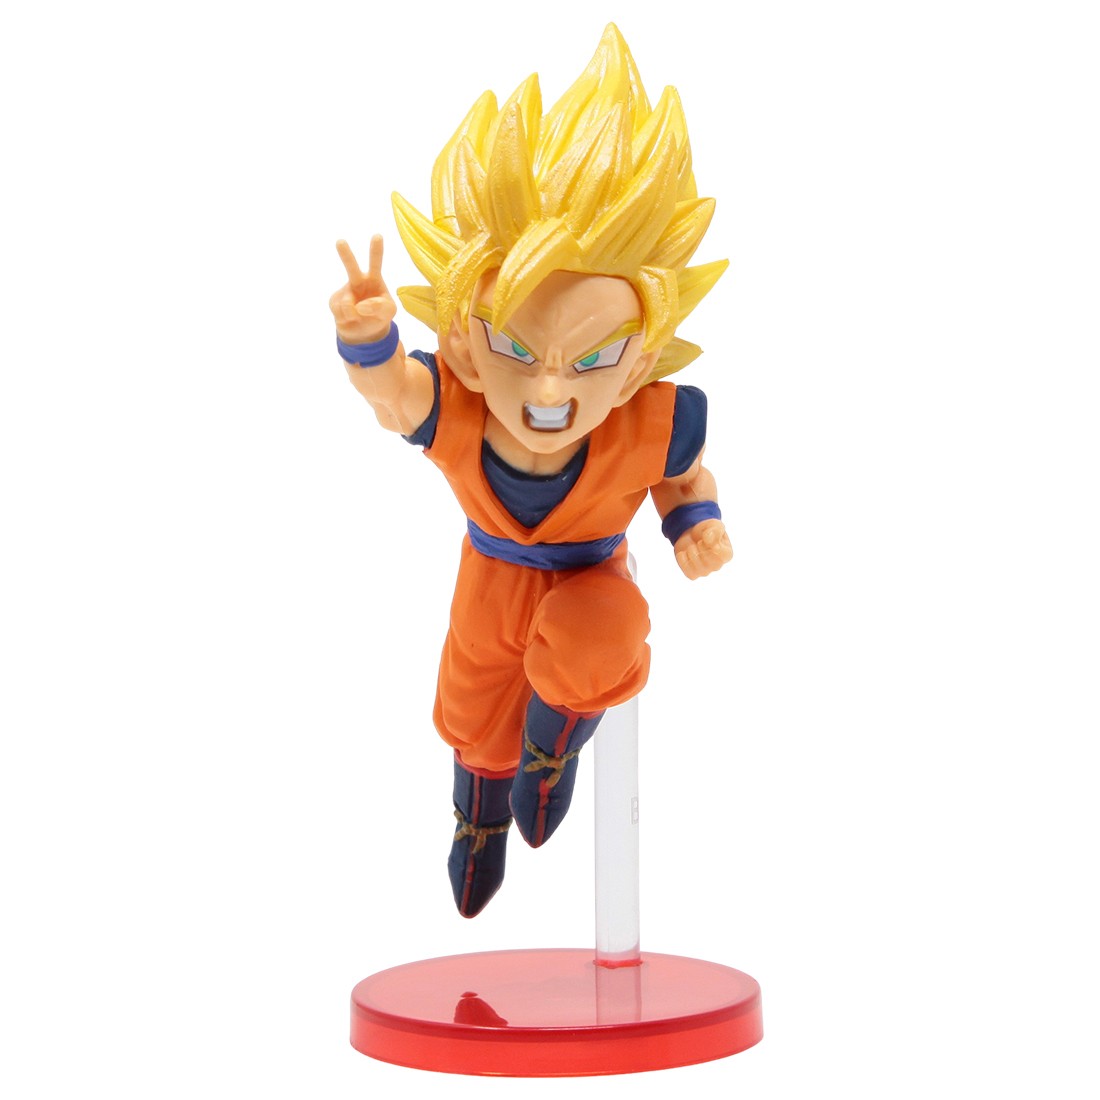 Action figure de Goku Super Saiyajin 2 - Action Figure Collection